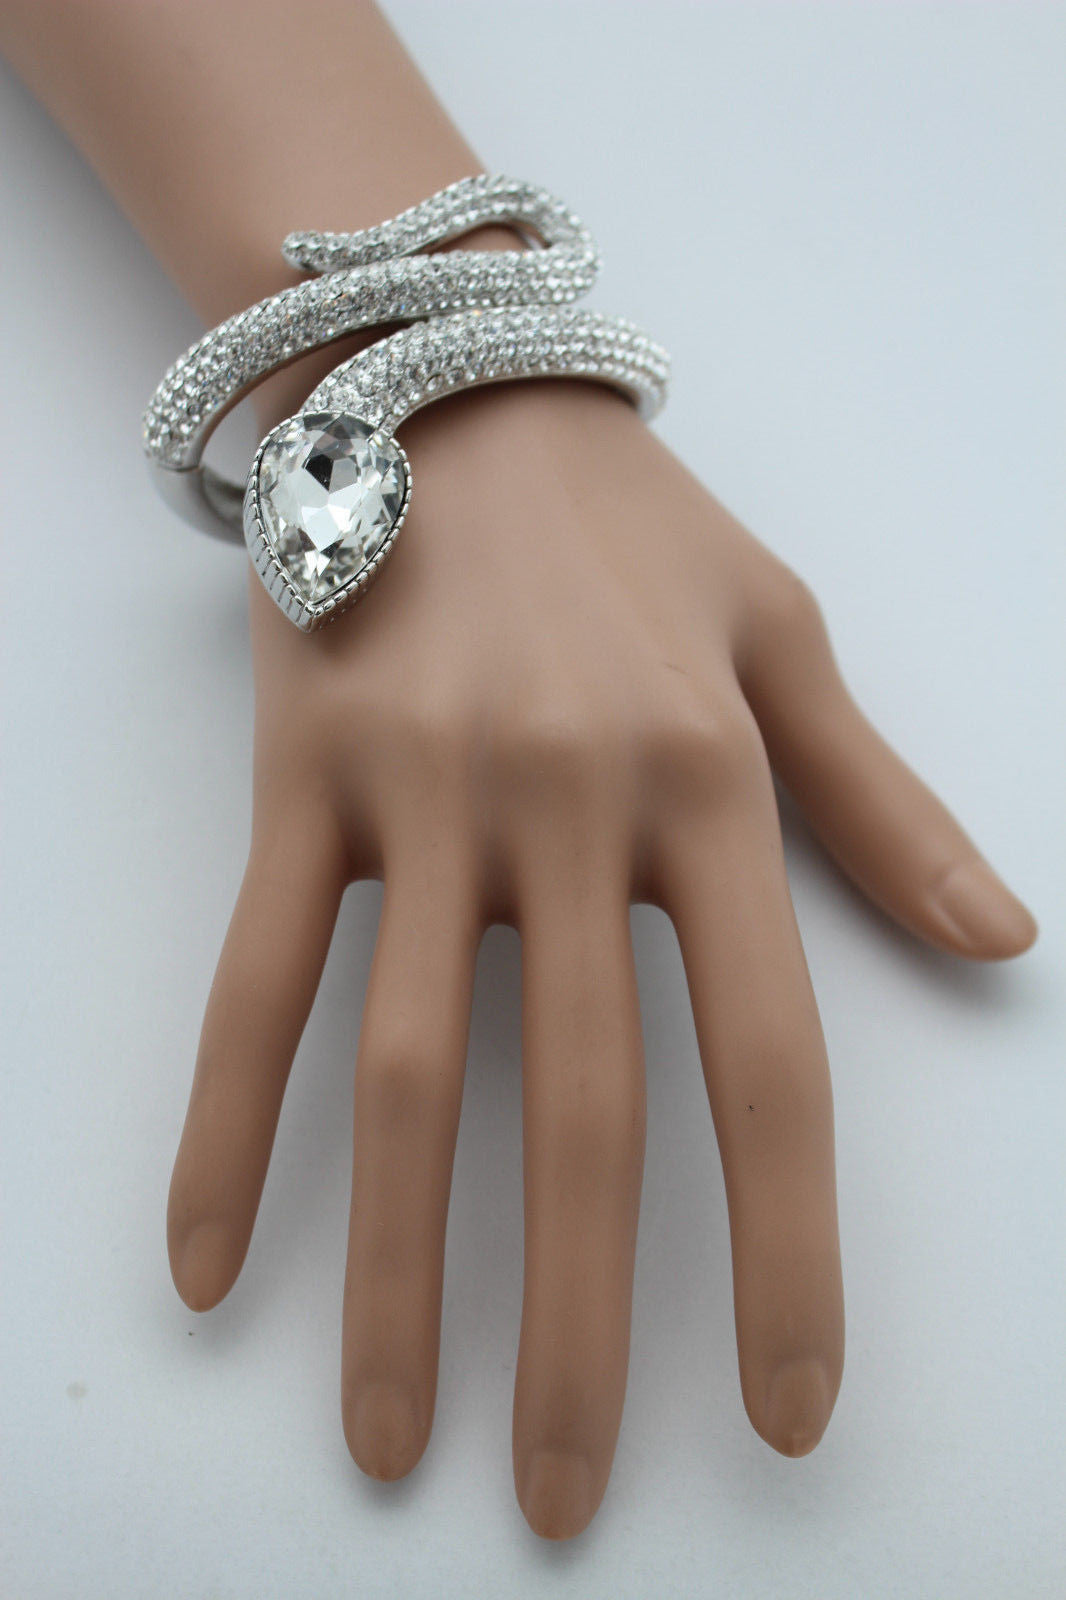 Silver Metal Cuff Bracelet Wrap Around Snake Larg Rhinestones Head Women Fashion Jewelry Accessories - alwaystyle4you - 2